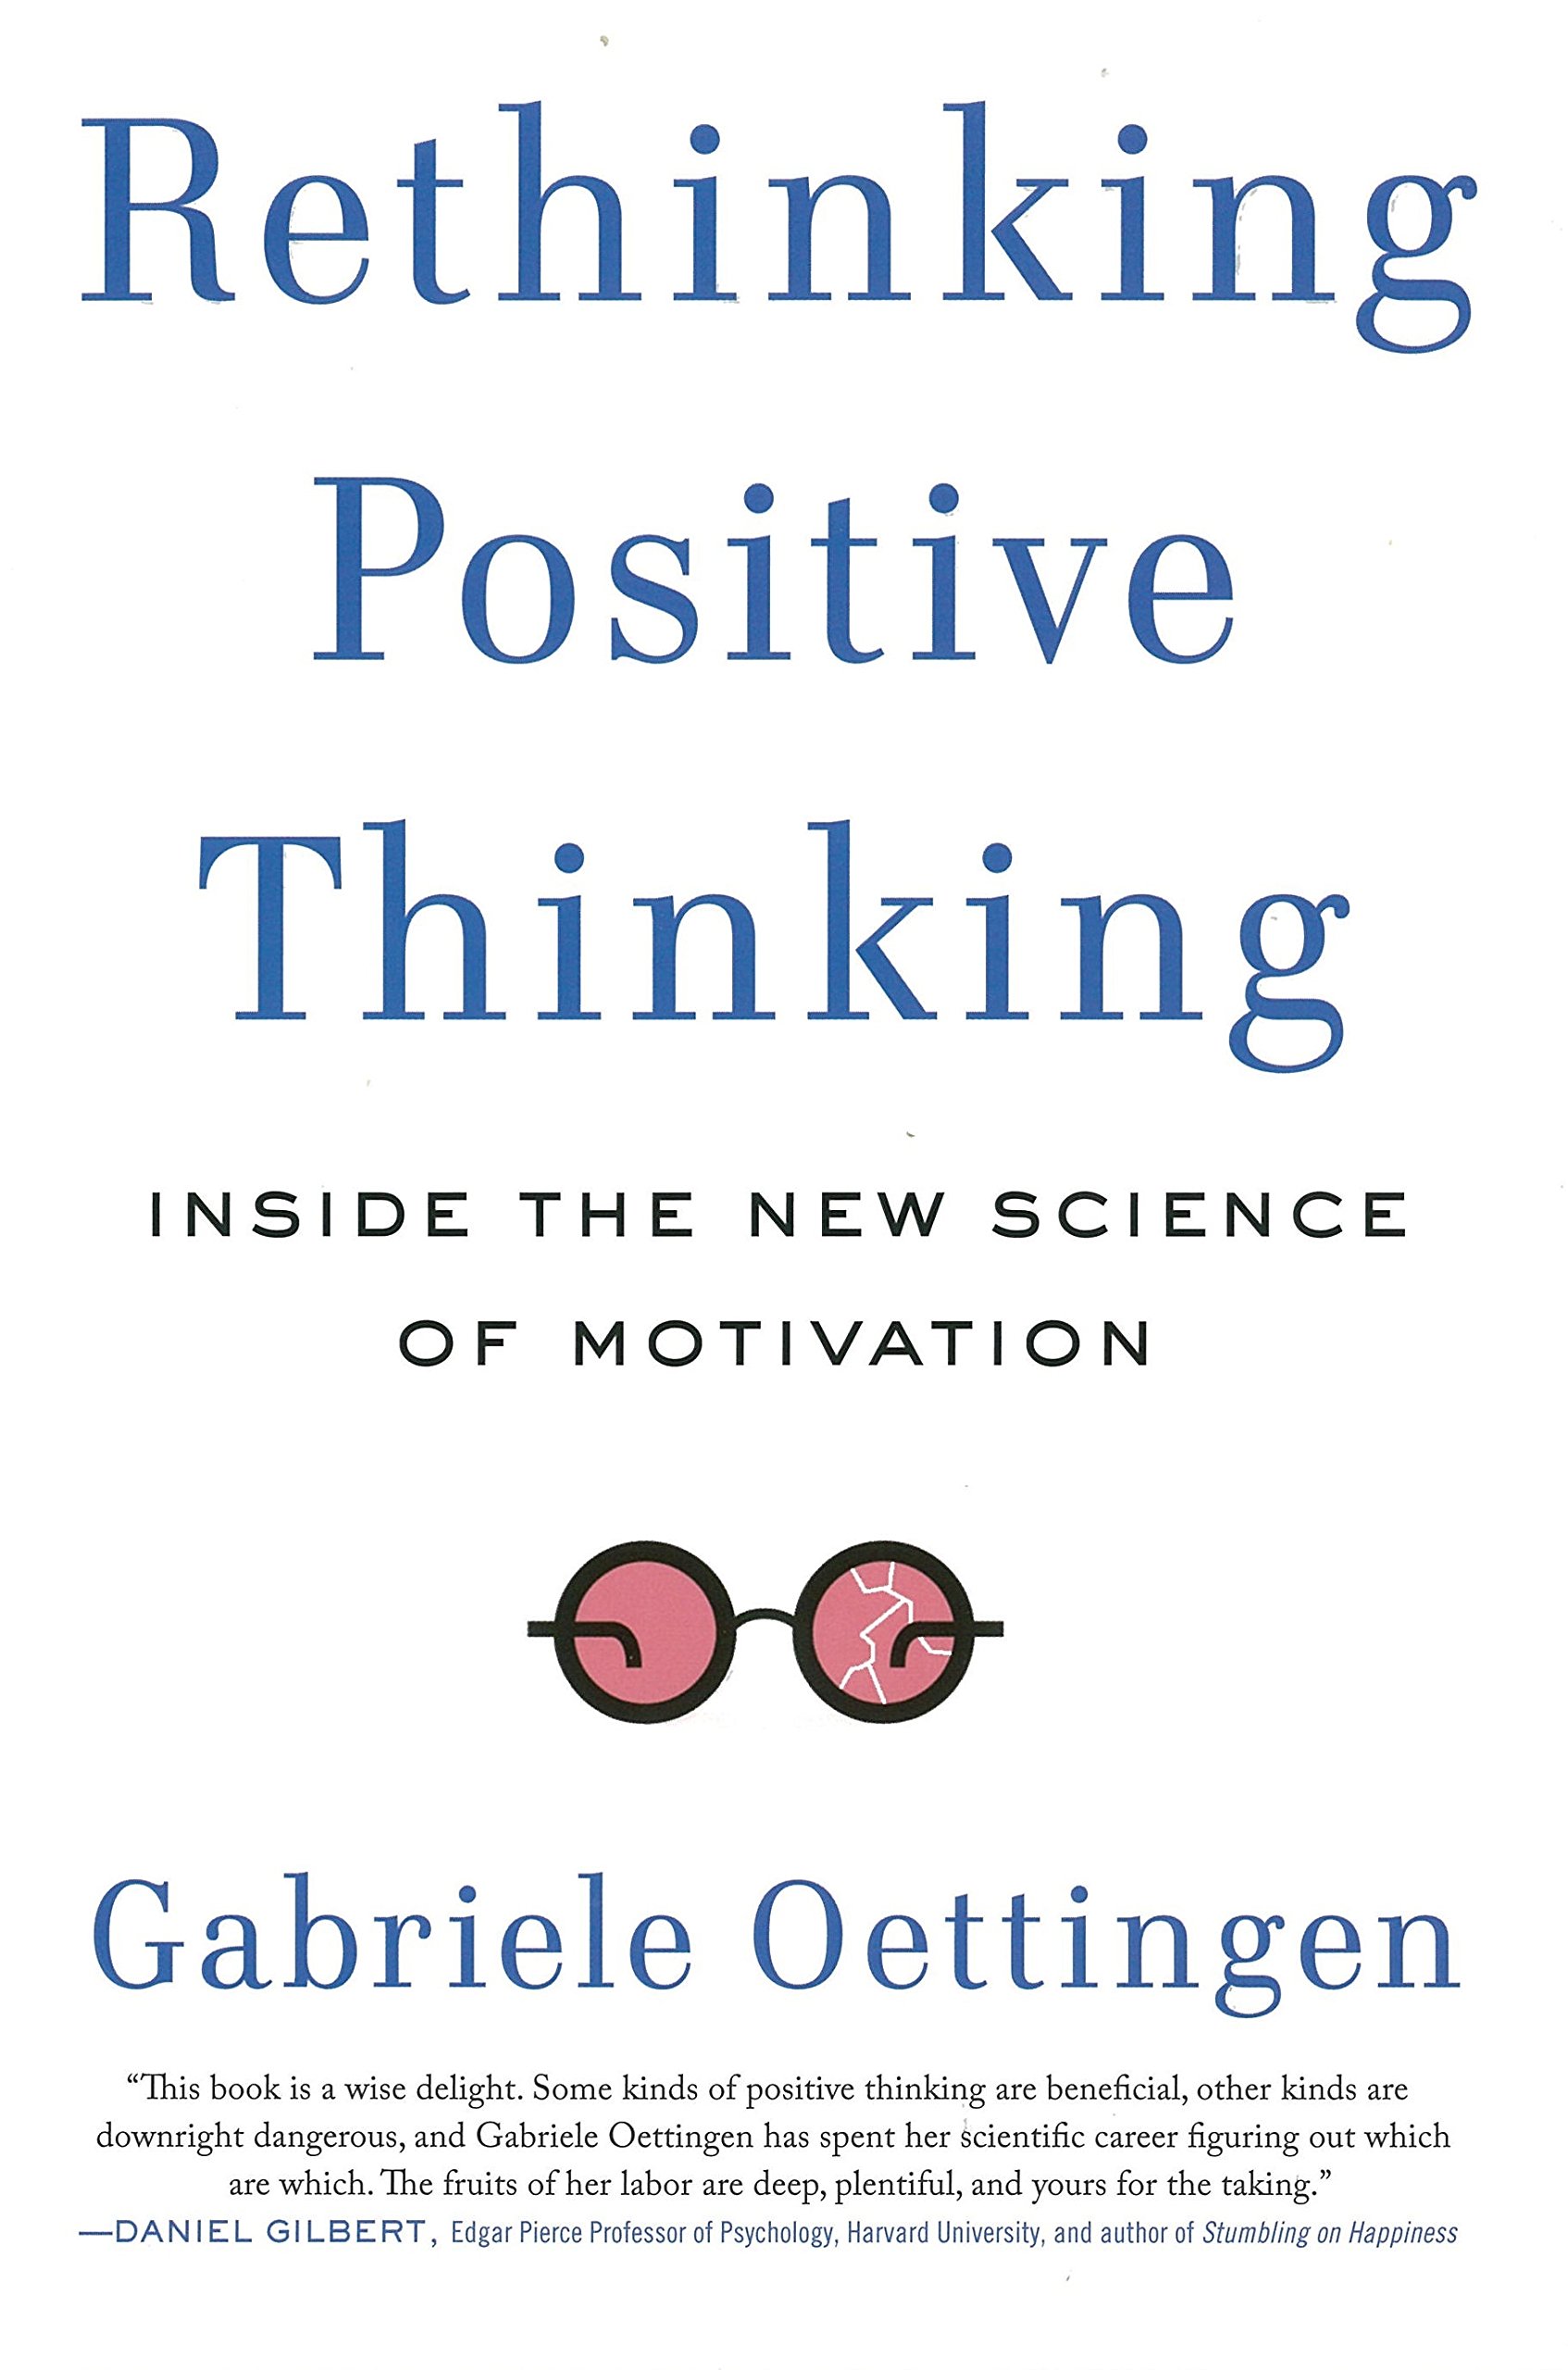 Rethinking Positive Thinking: Inside the New Science of Motivation
Gabriele Oettingen